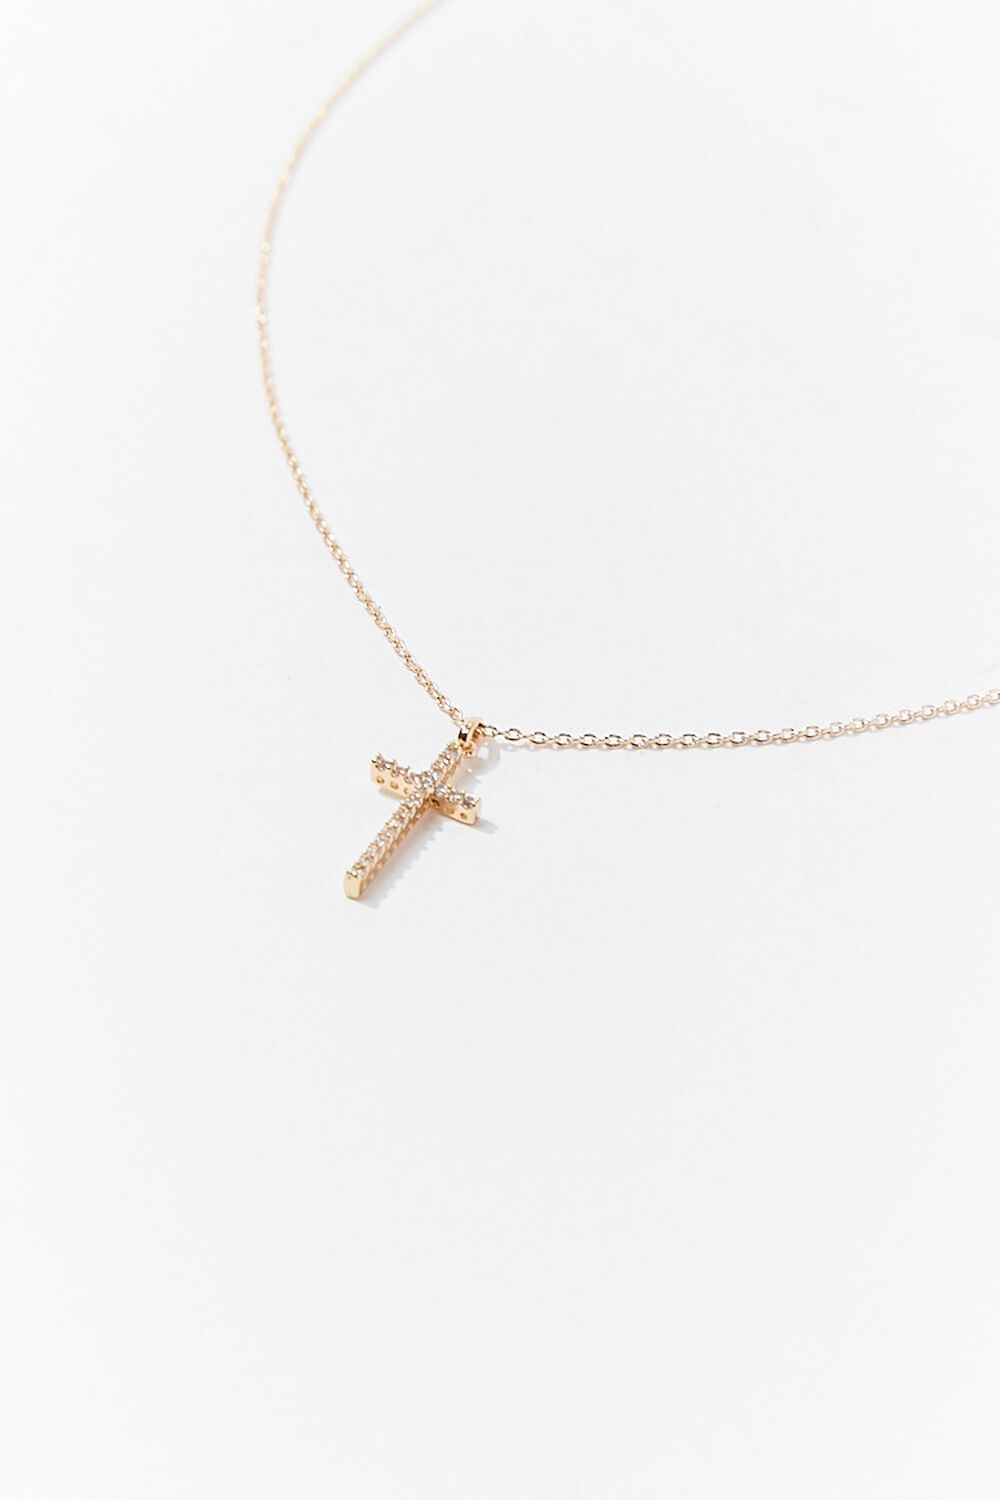 GOLD CZ Stone Cross Pendant Necklace, image 1